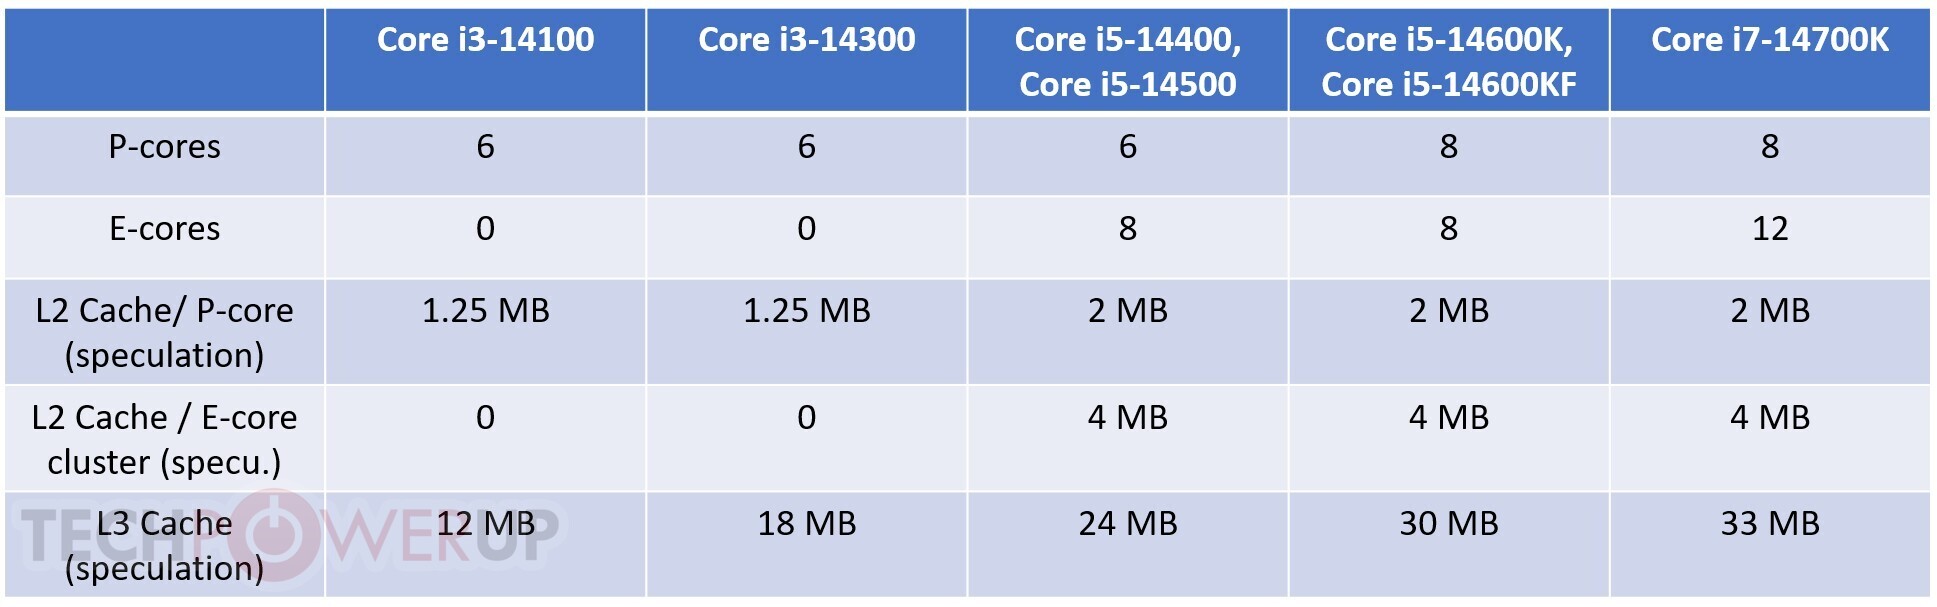 Intel Core i5-14600K an 8P+8E Processor, Core i3 6P+0E, Core